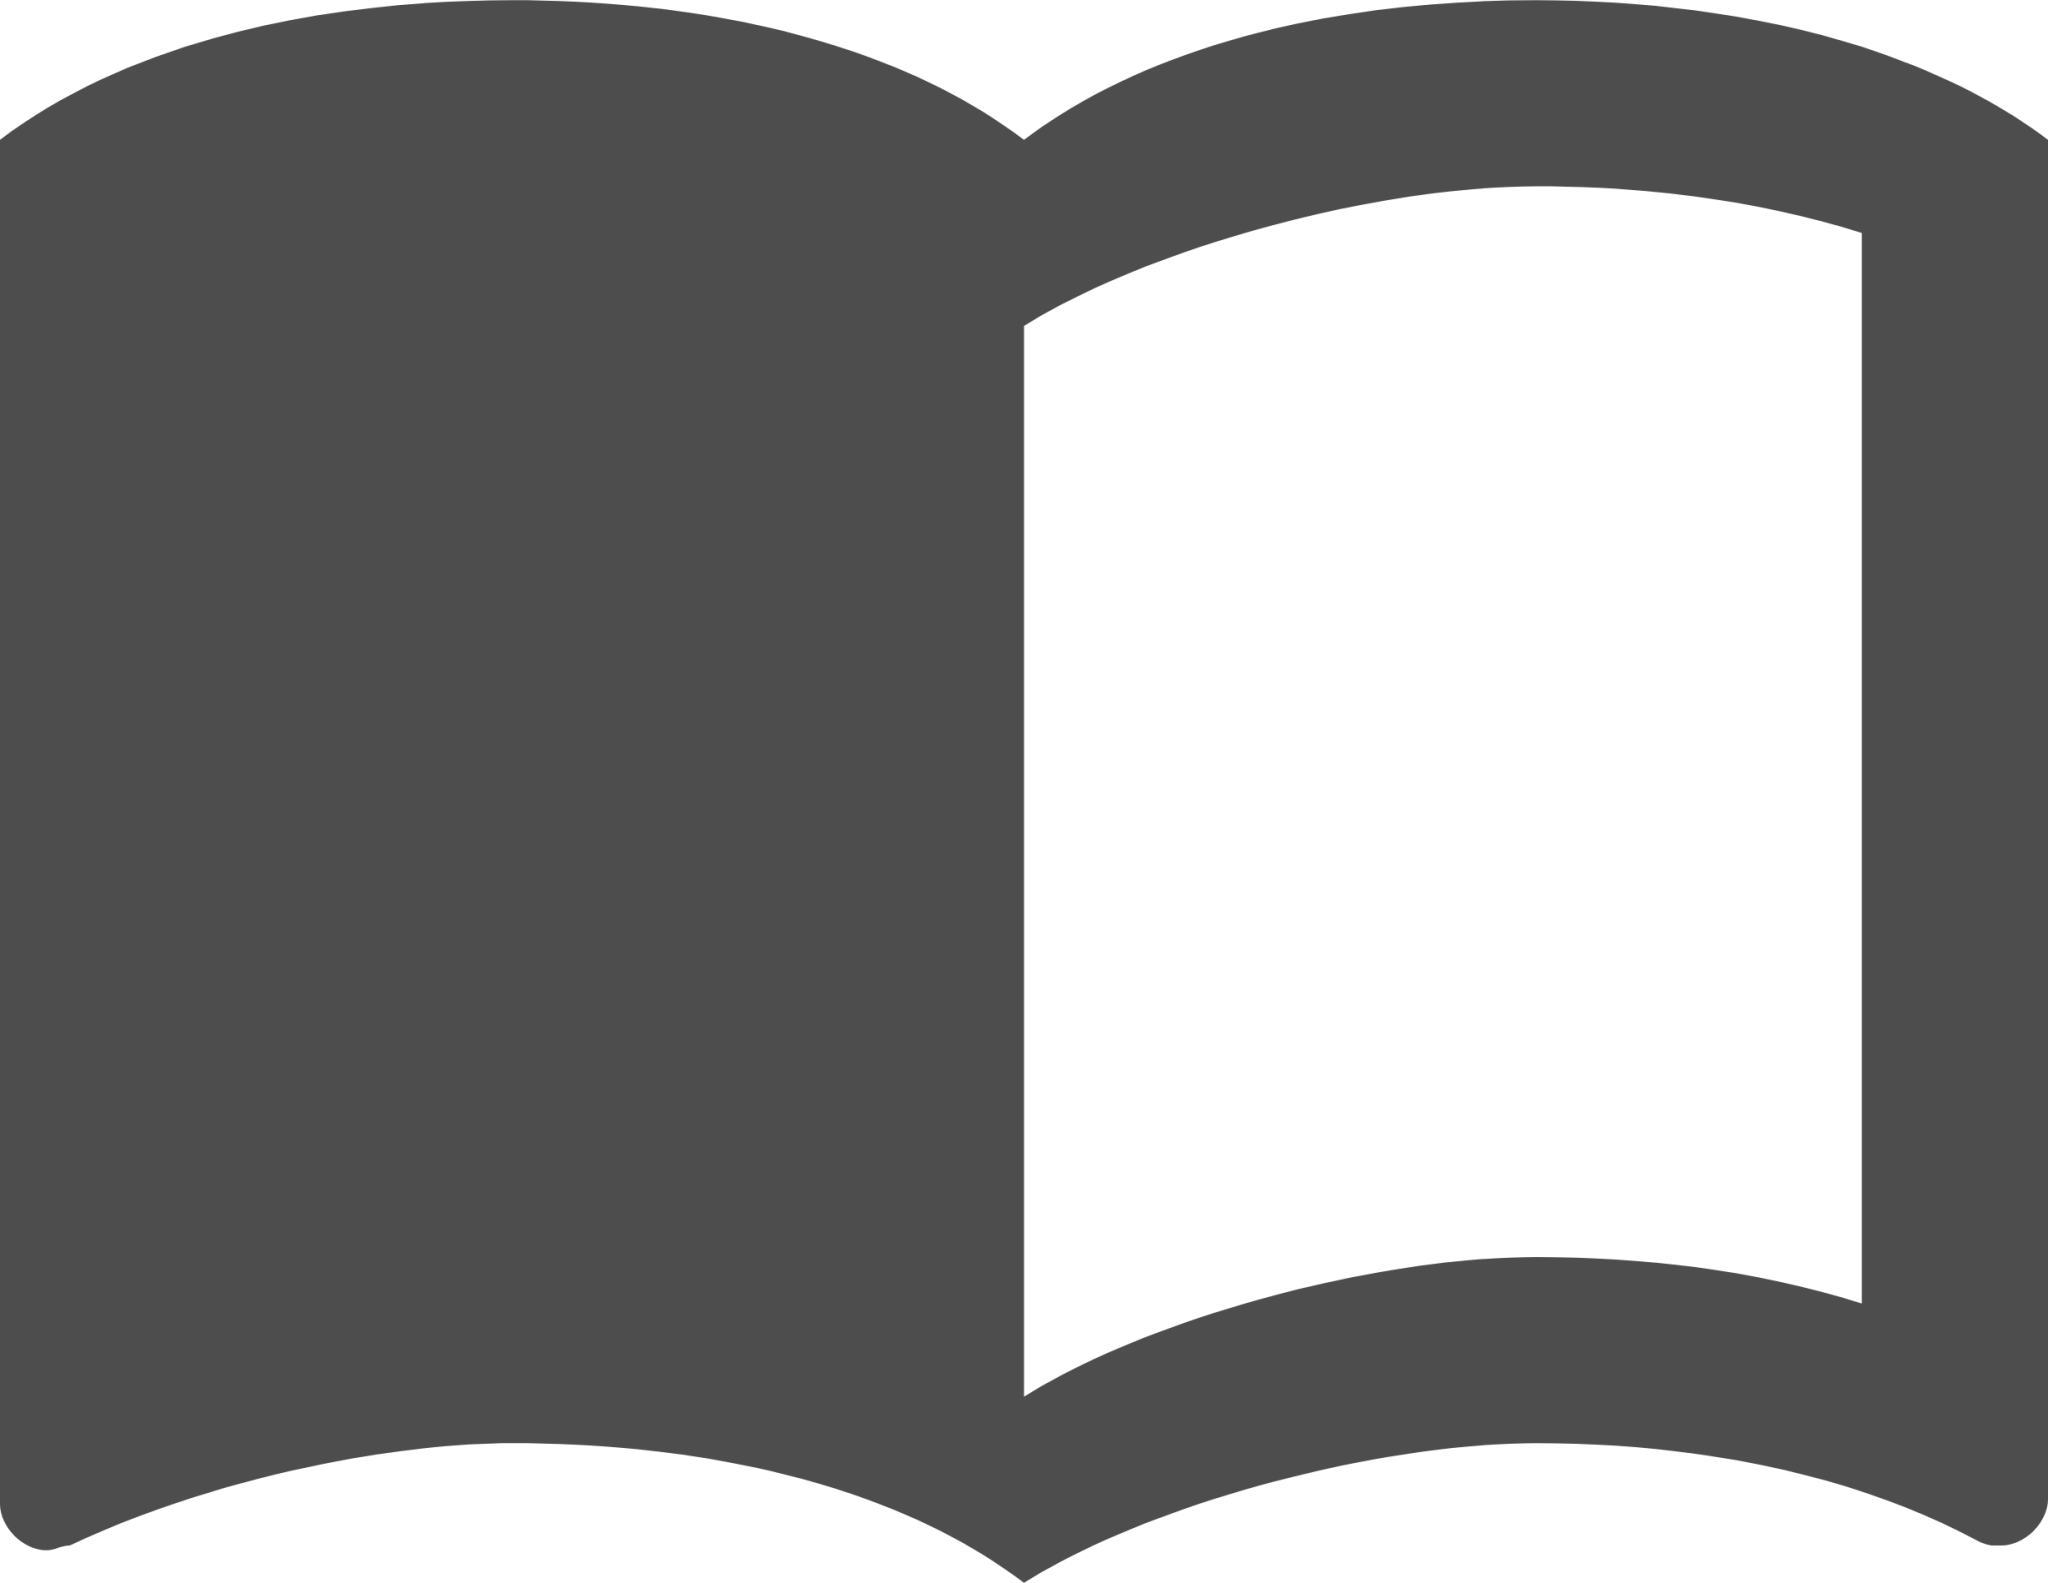 folder books icon